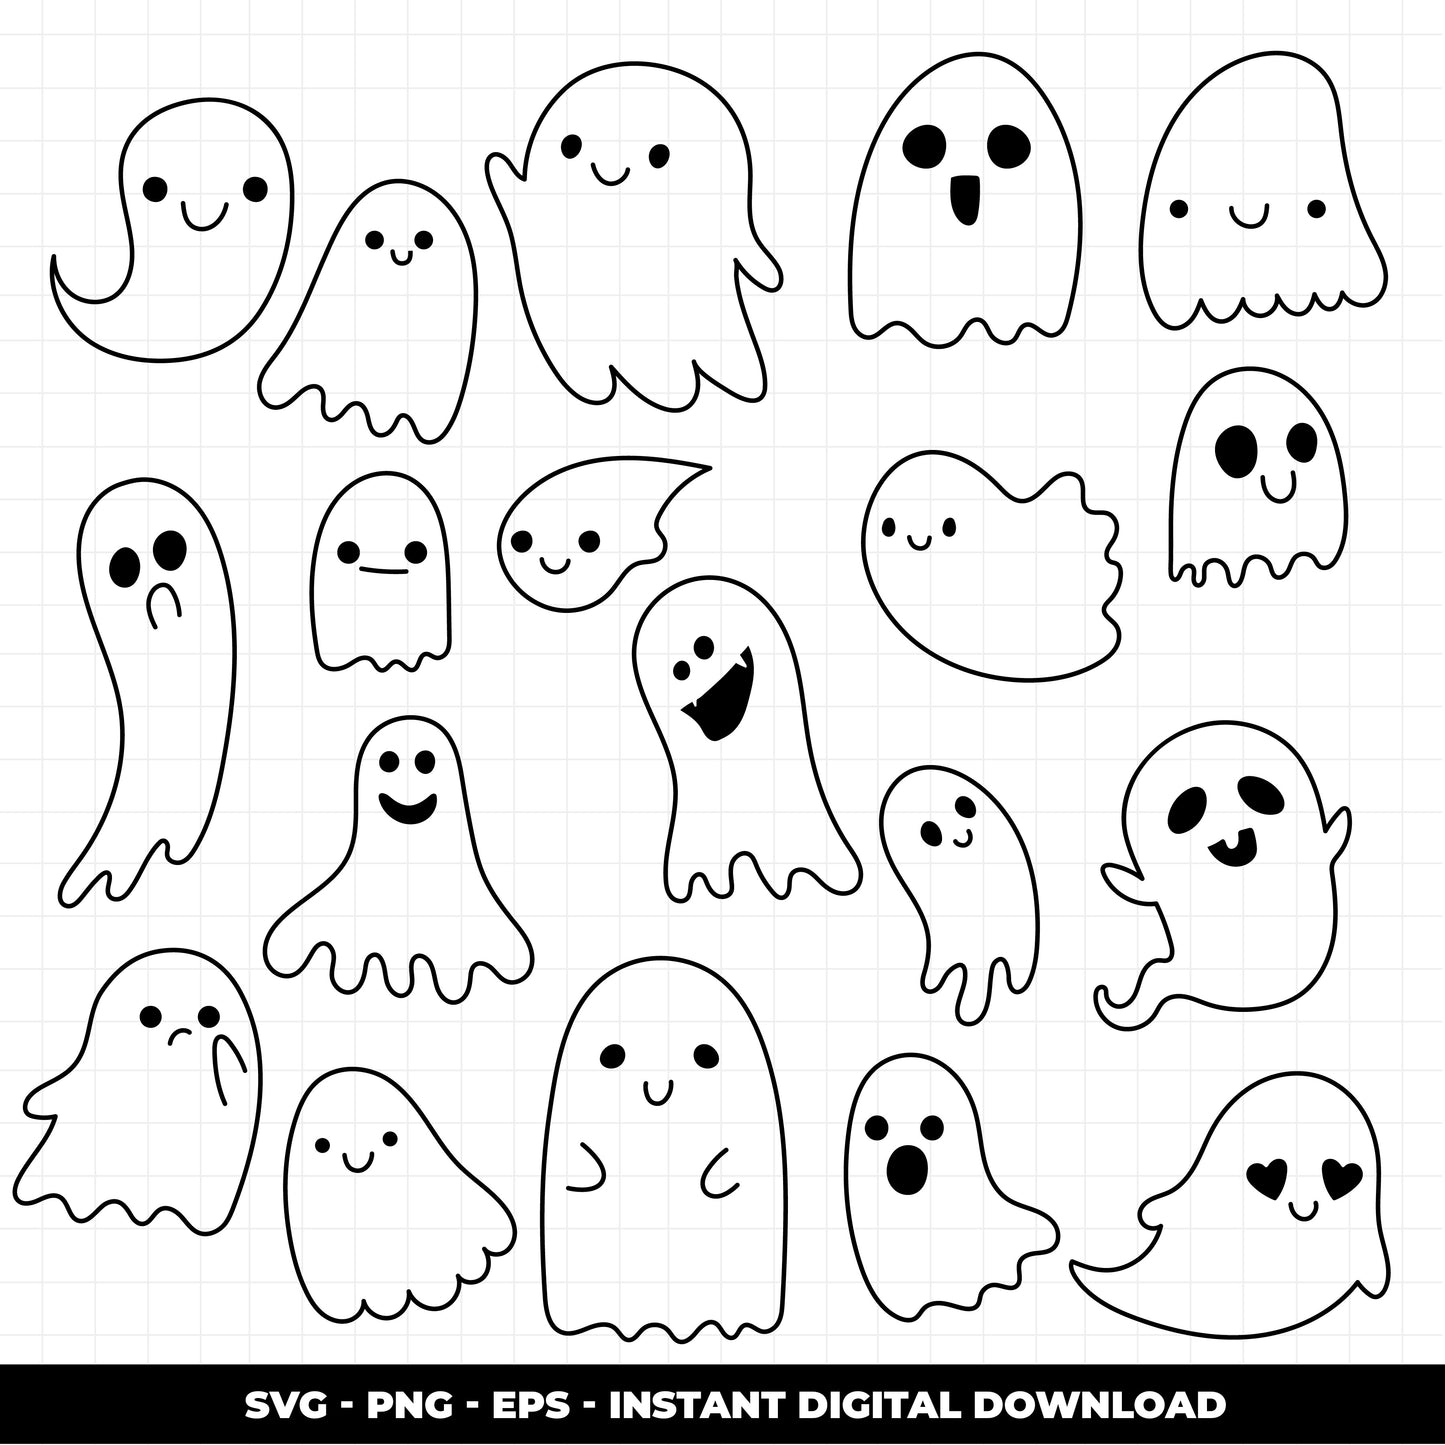 COD1403 - Halloween Doodles clipart #4/Pumpkin Clipart /halloween Clipart/scrapbook cliparts/Instant Download/Commercial use/Erin Condren